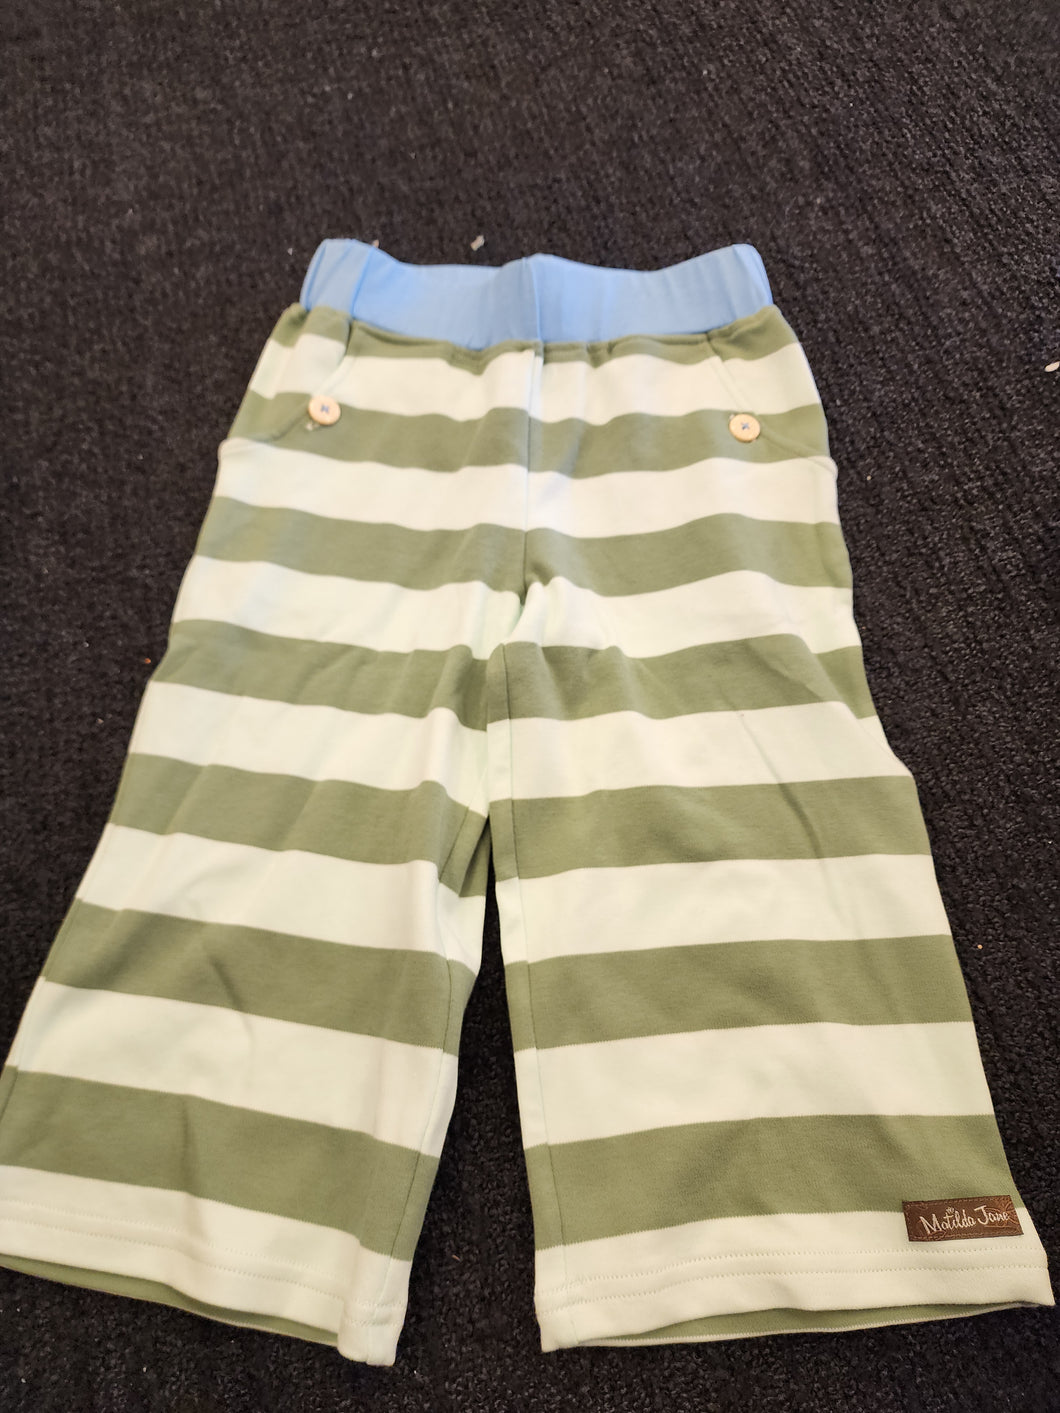 Matilda jane striped pants 6